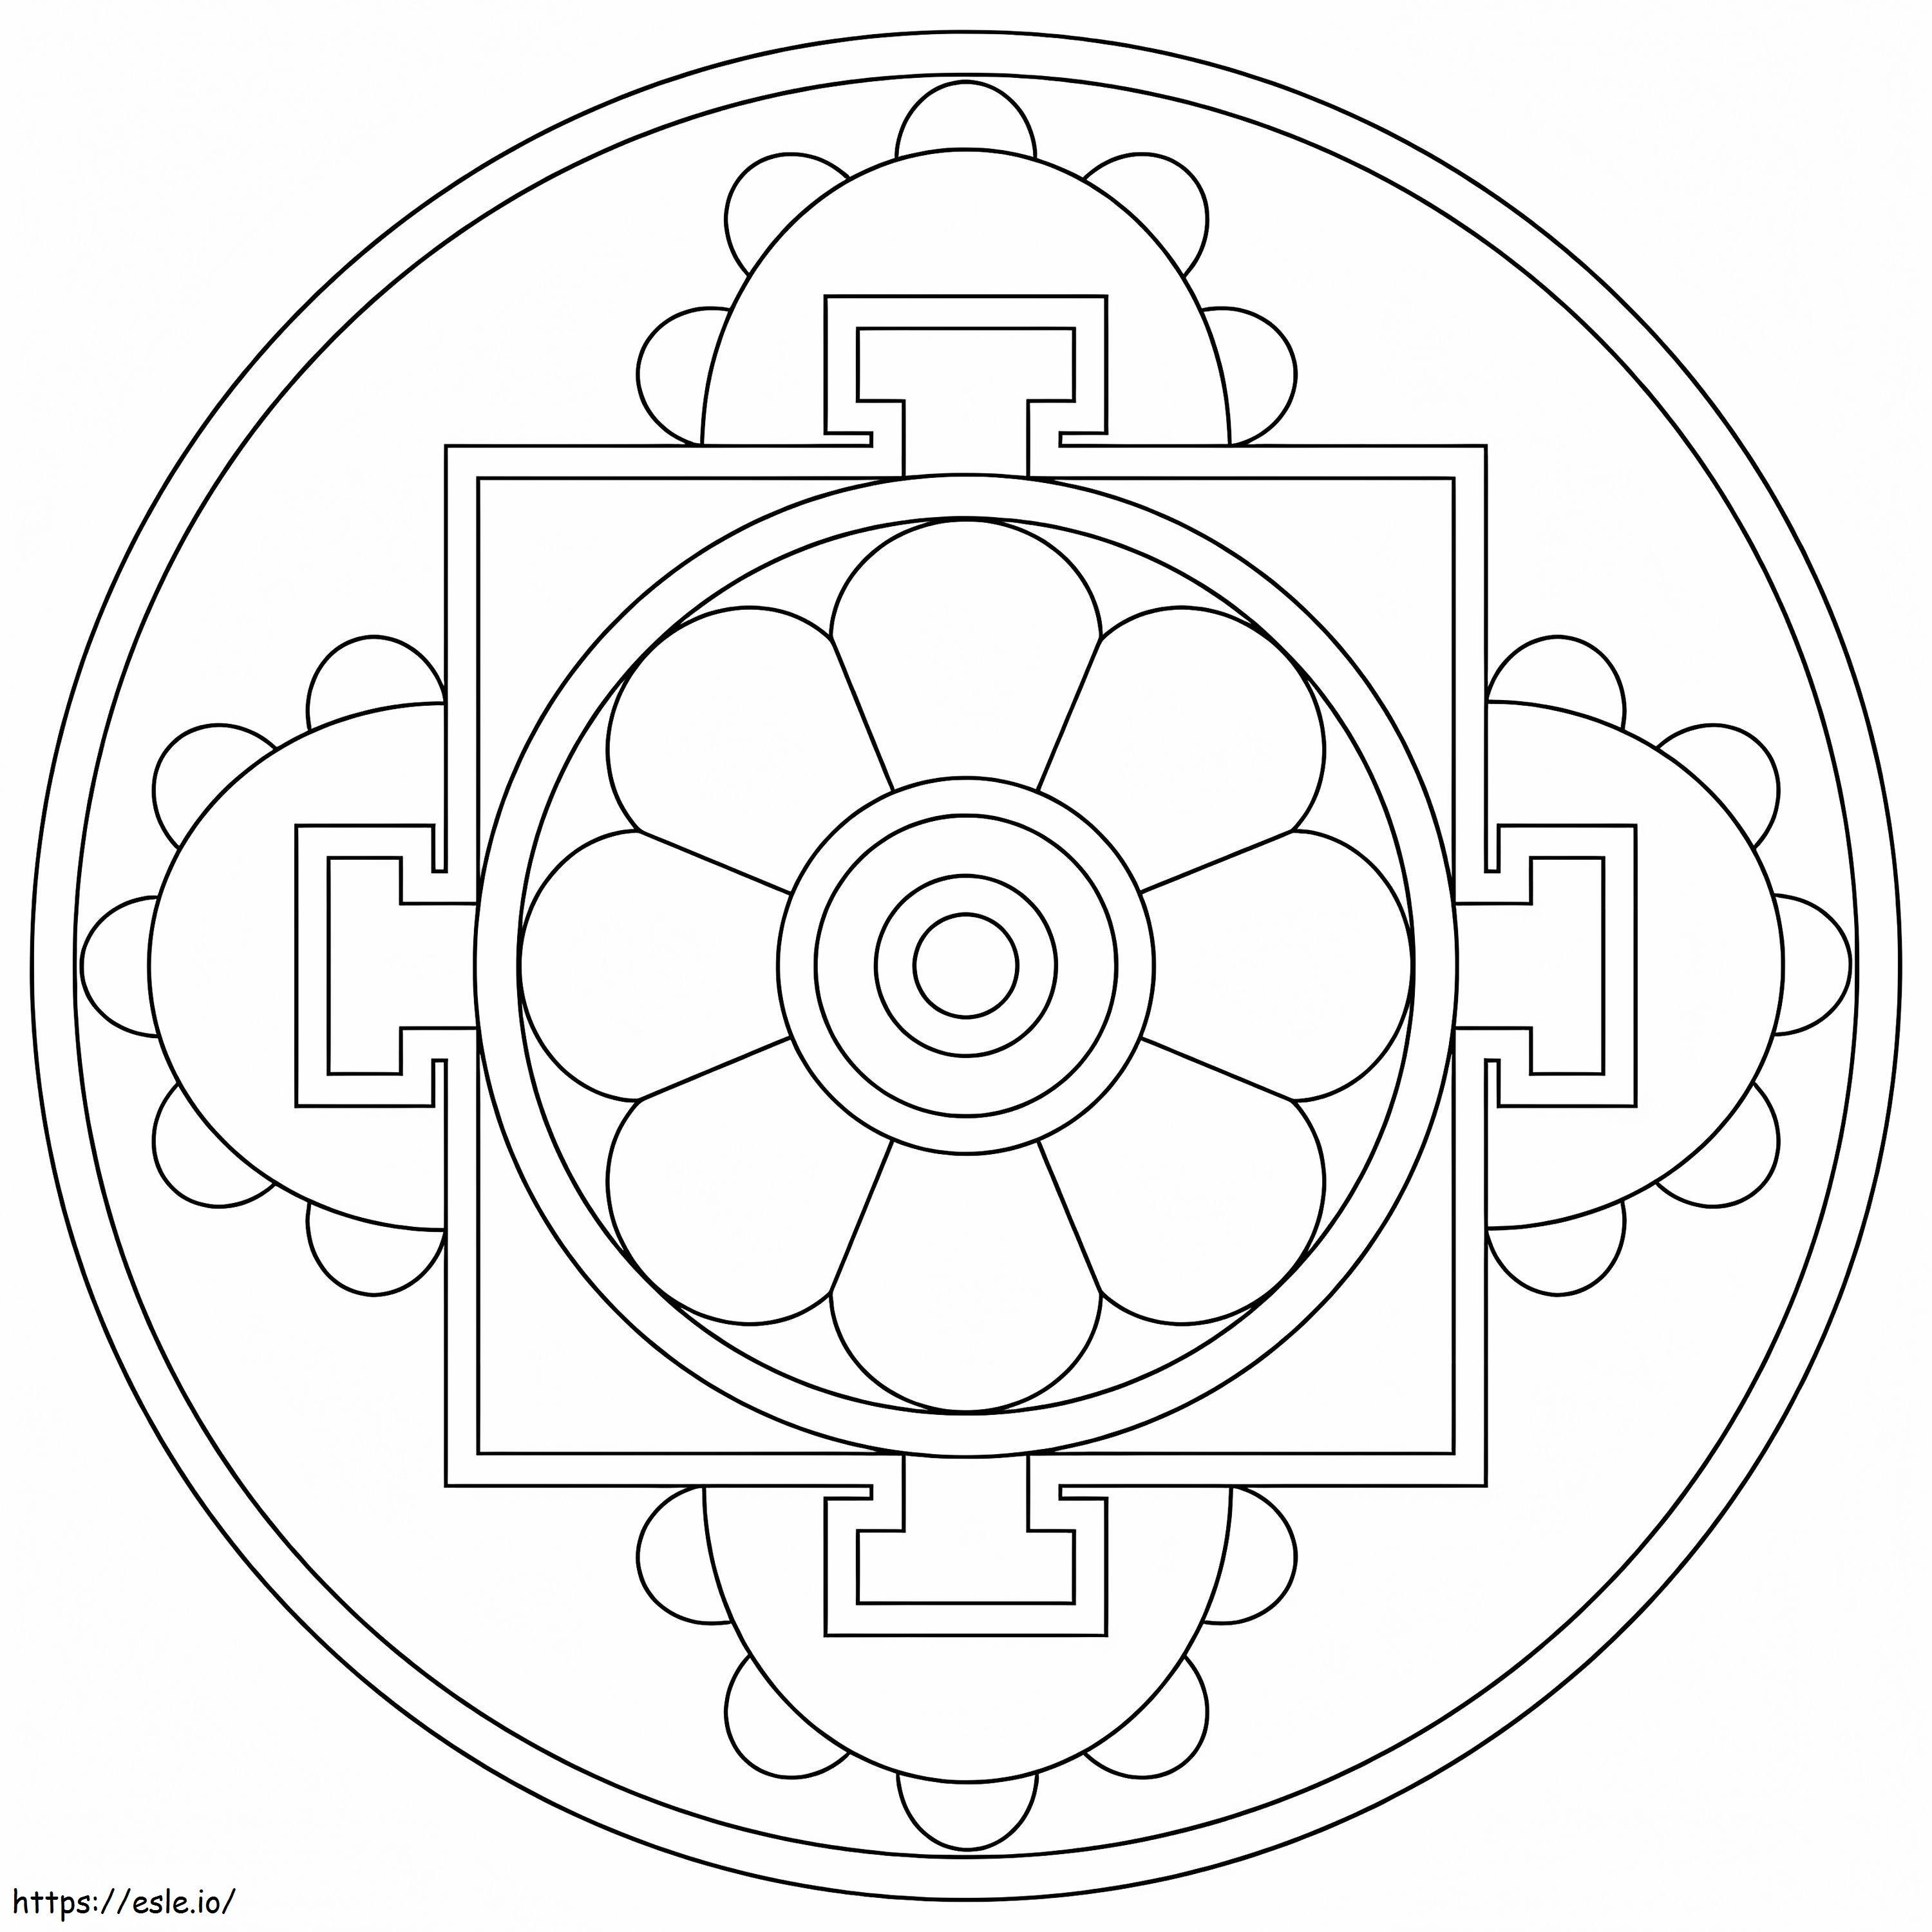 Mandala tibetana sencilla para colorear